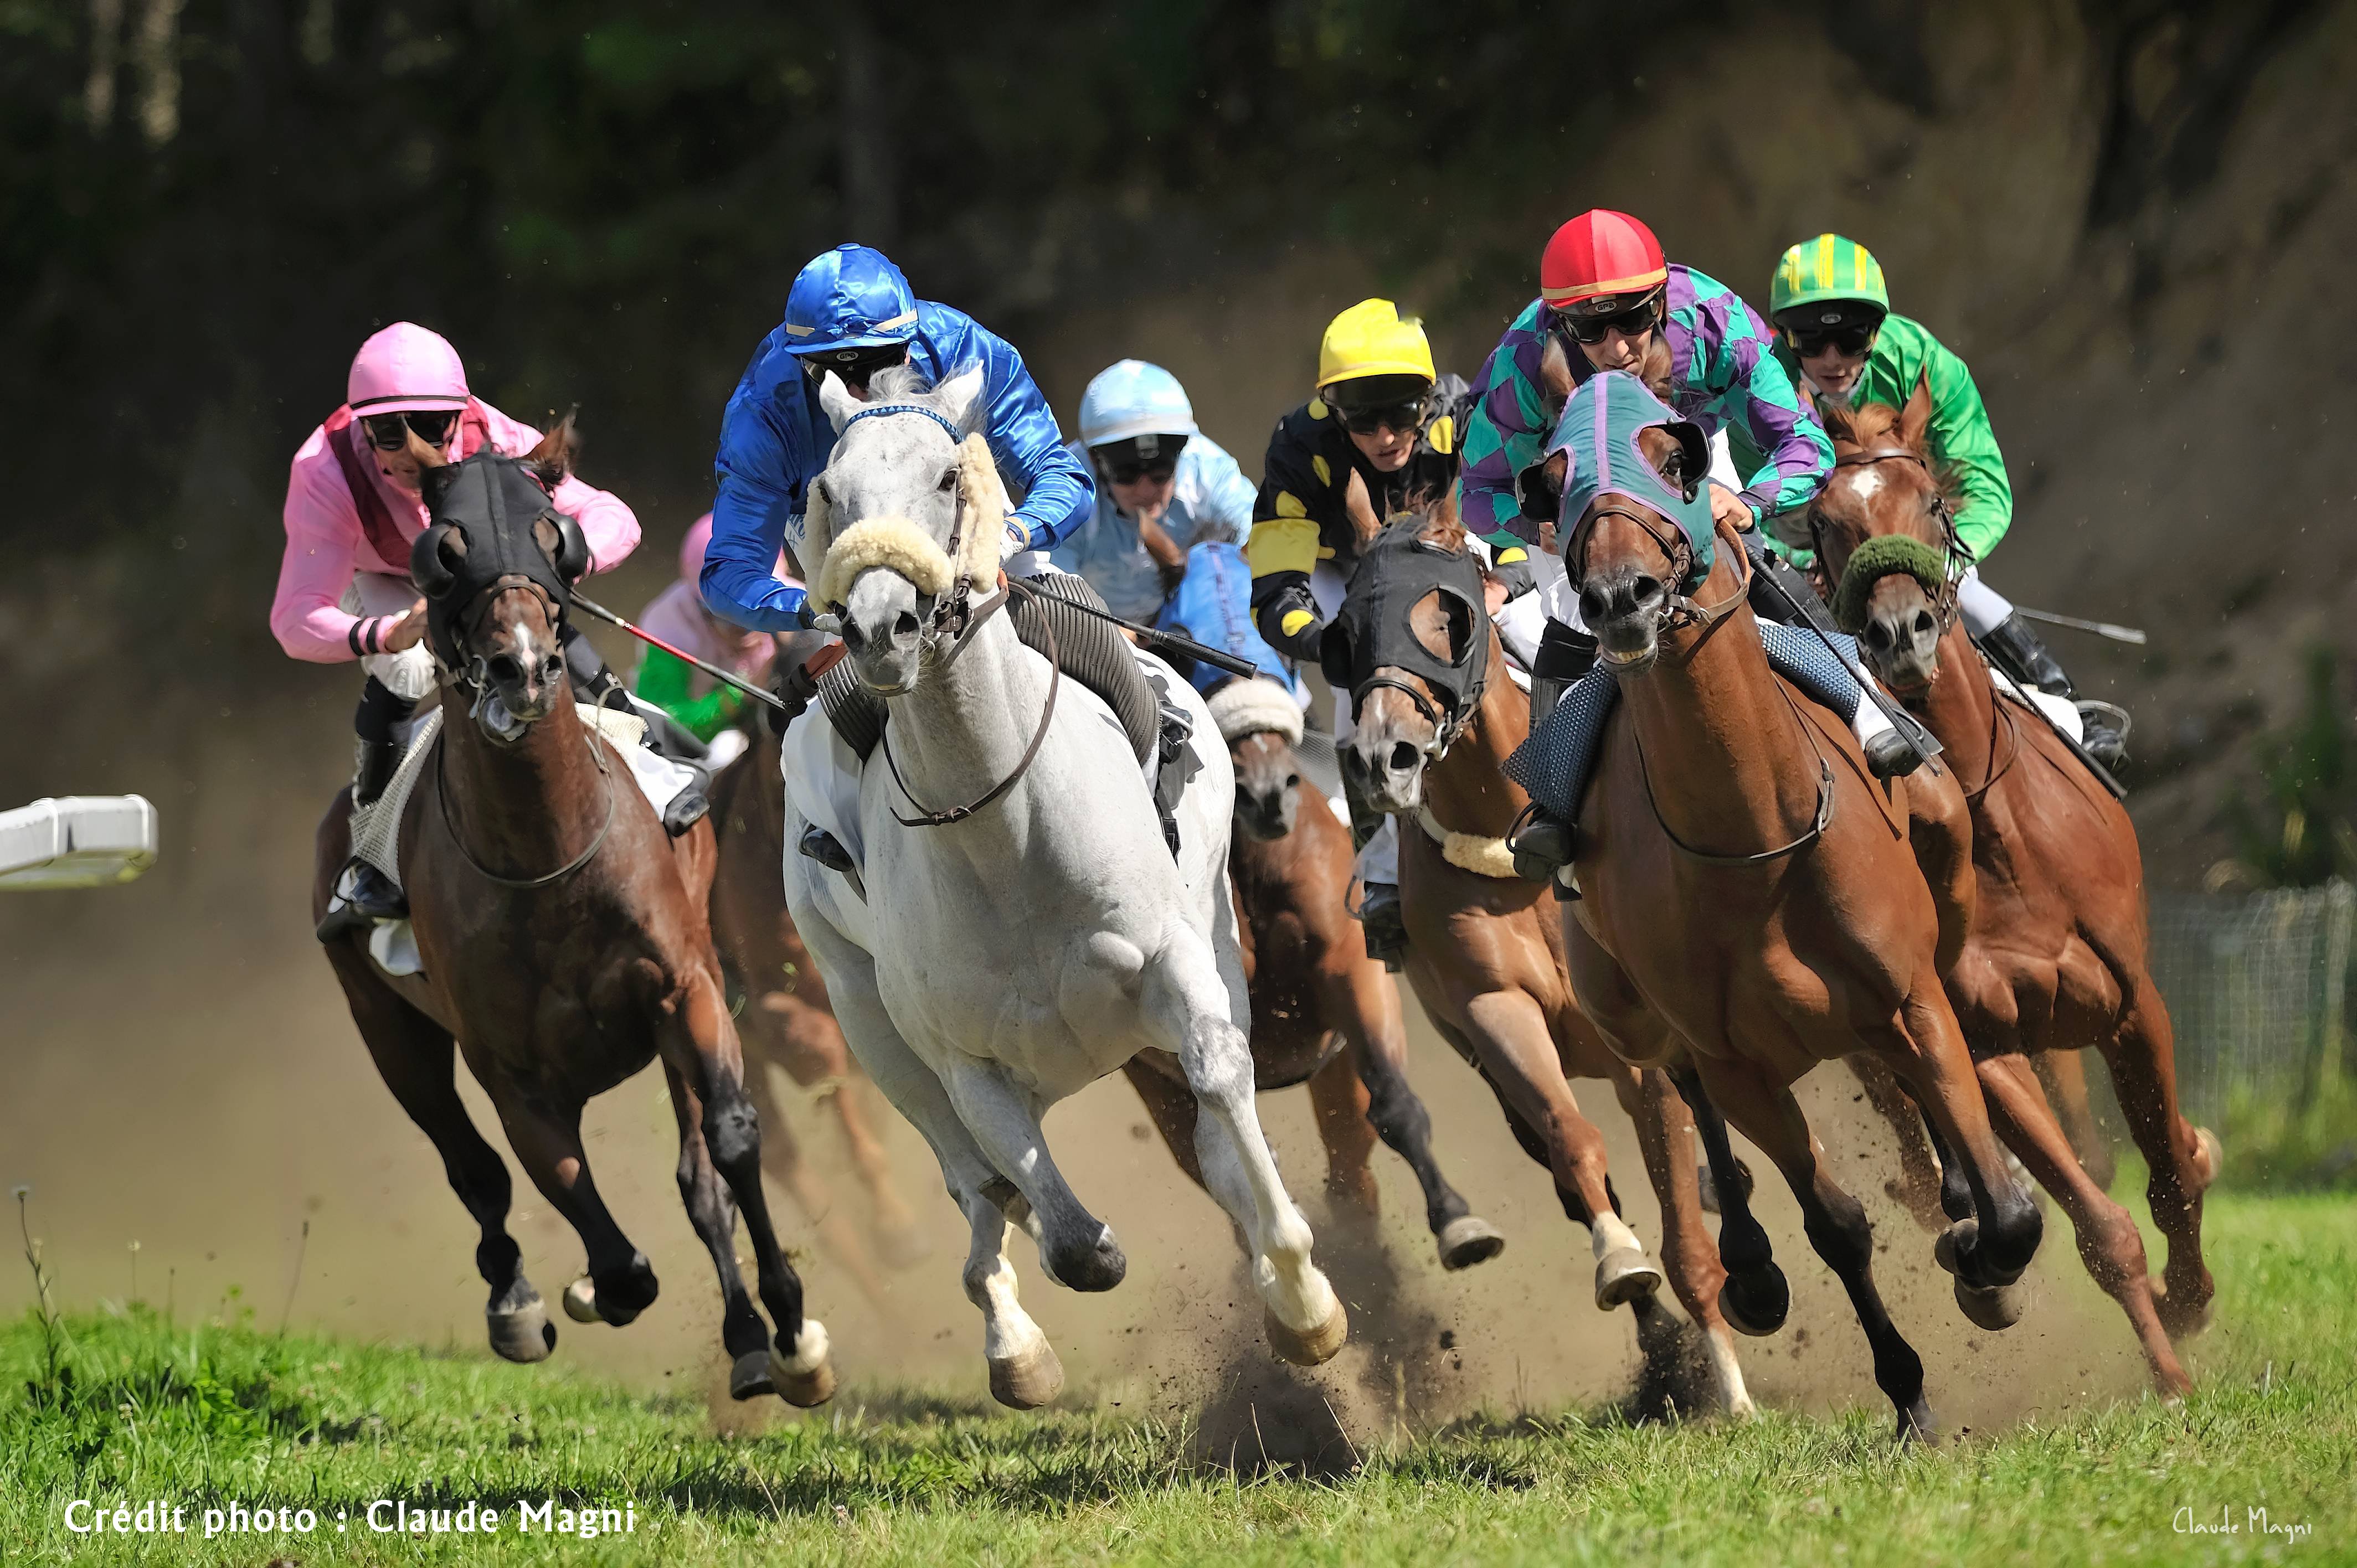 horse-racing-race-equestrian-sport-jockey-horses-wallpapers-hd